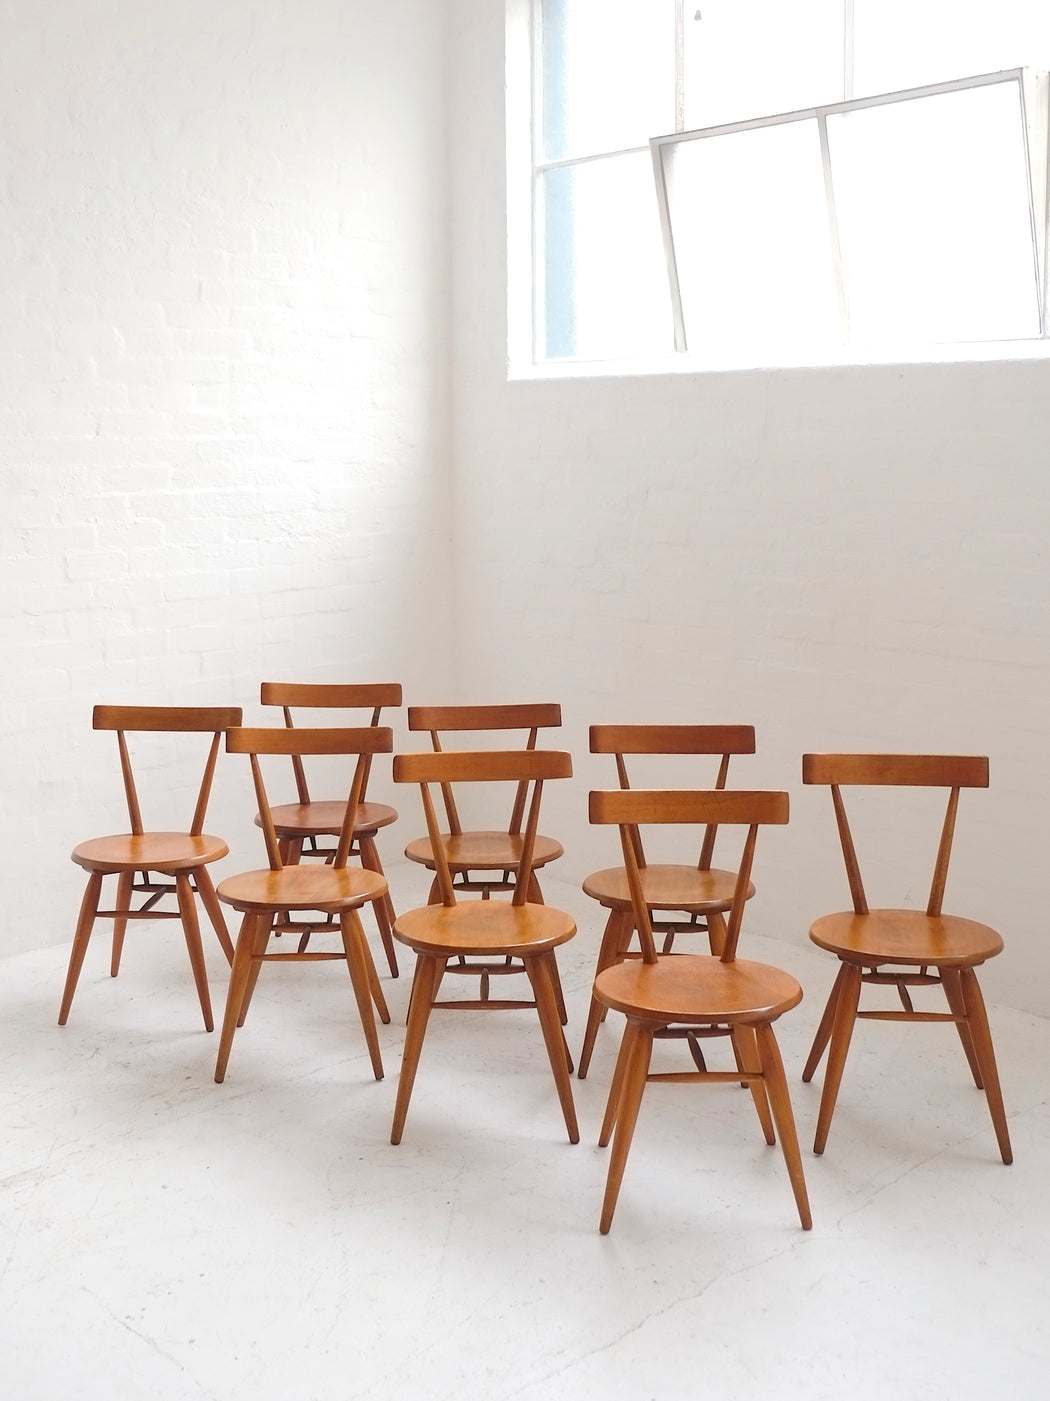 Fred Ward 'Swedish Style' Chairs